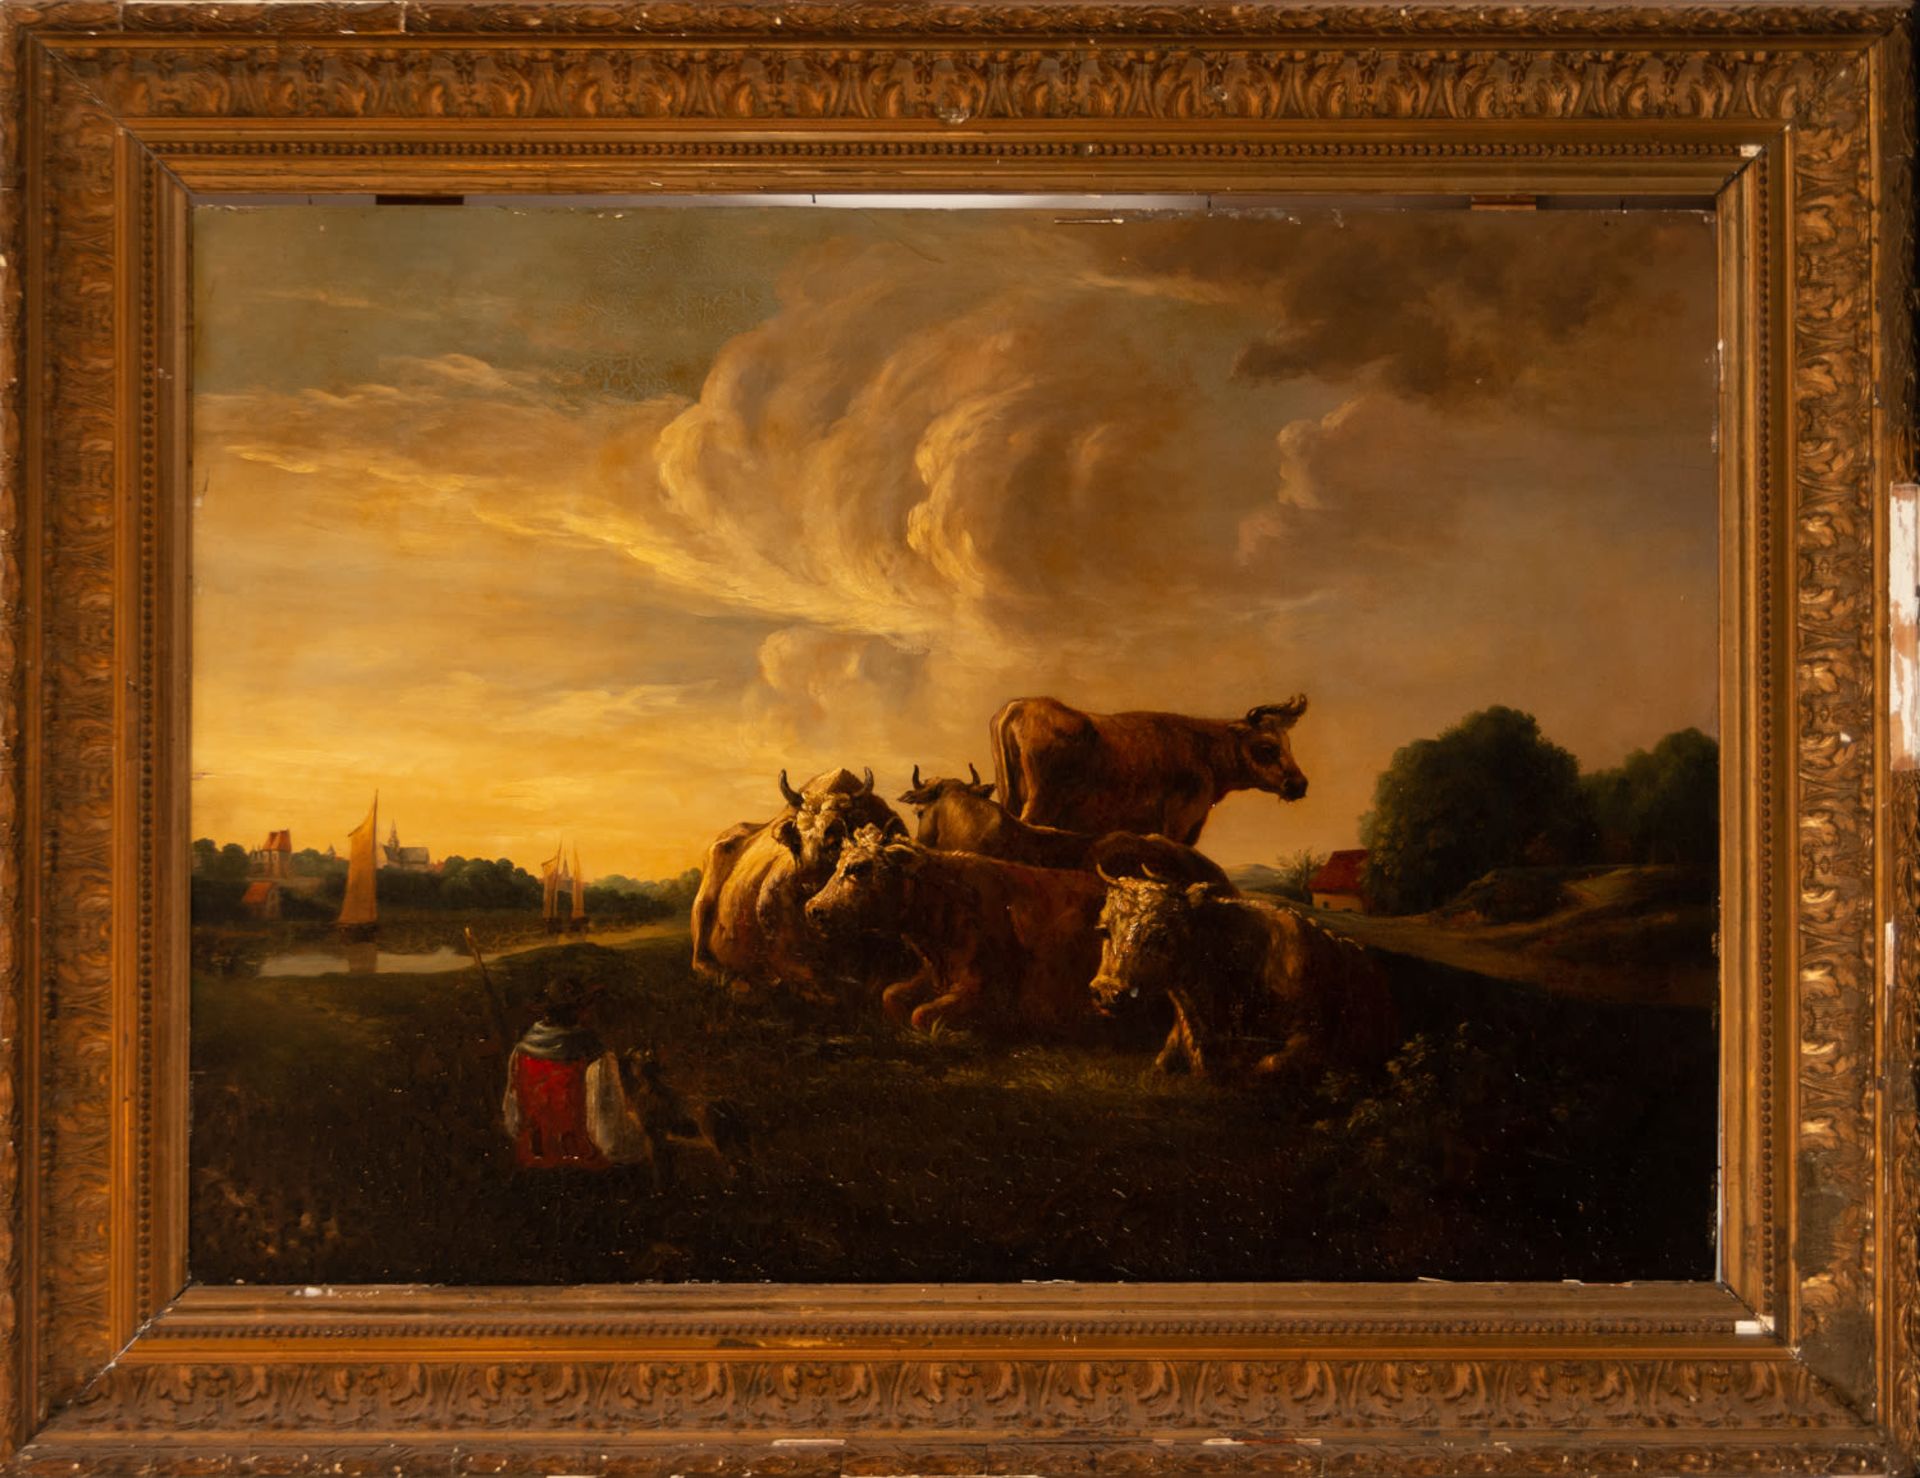 Pastoral Scene with Cows, follower of Salvator Rosa, called Rosa de Tívoli, Dutch school of the 18th